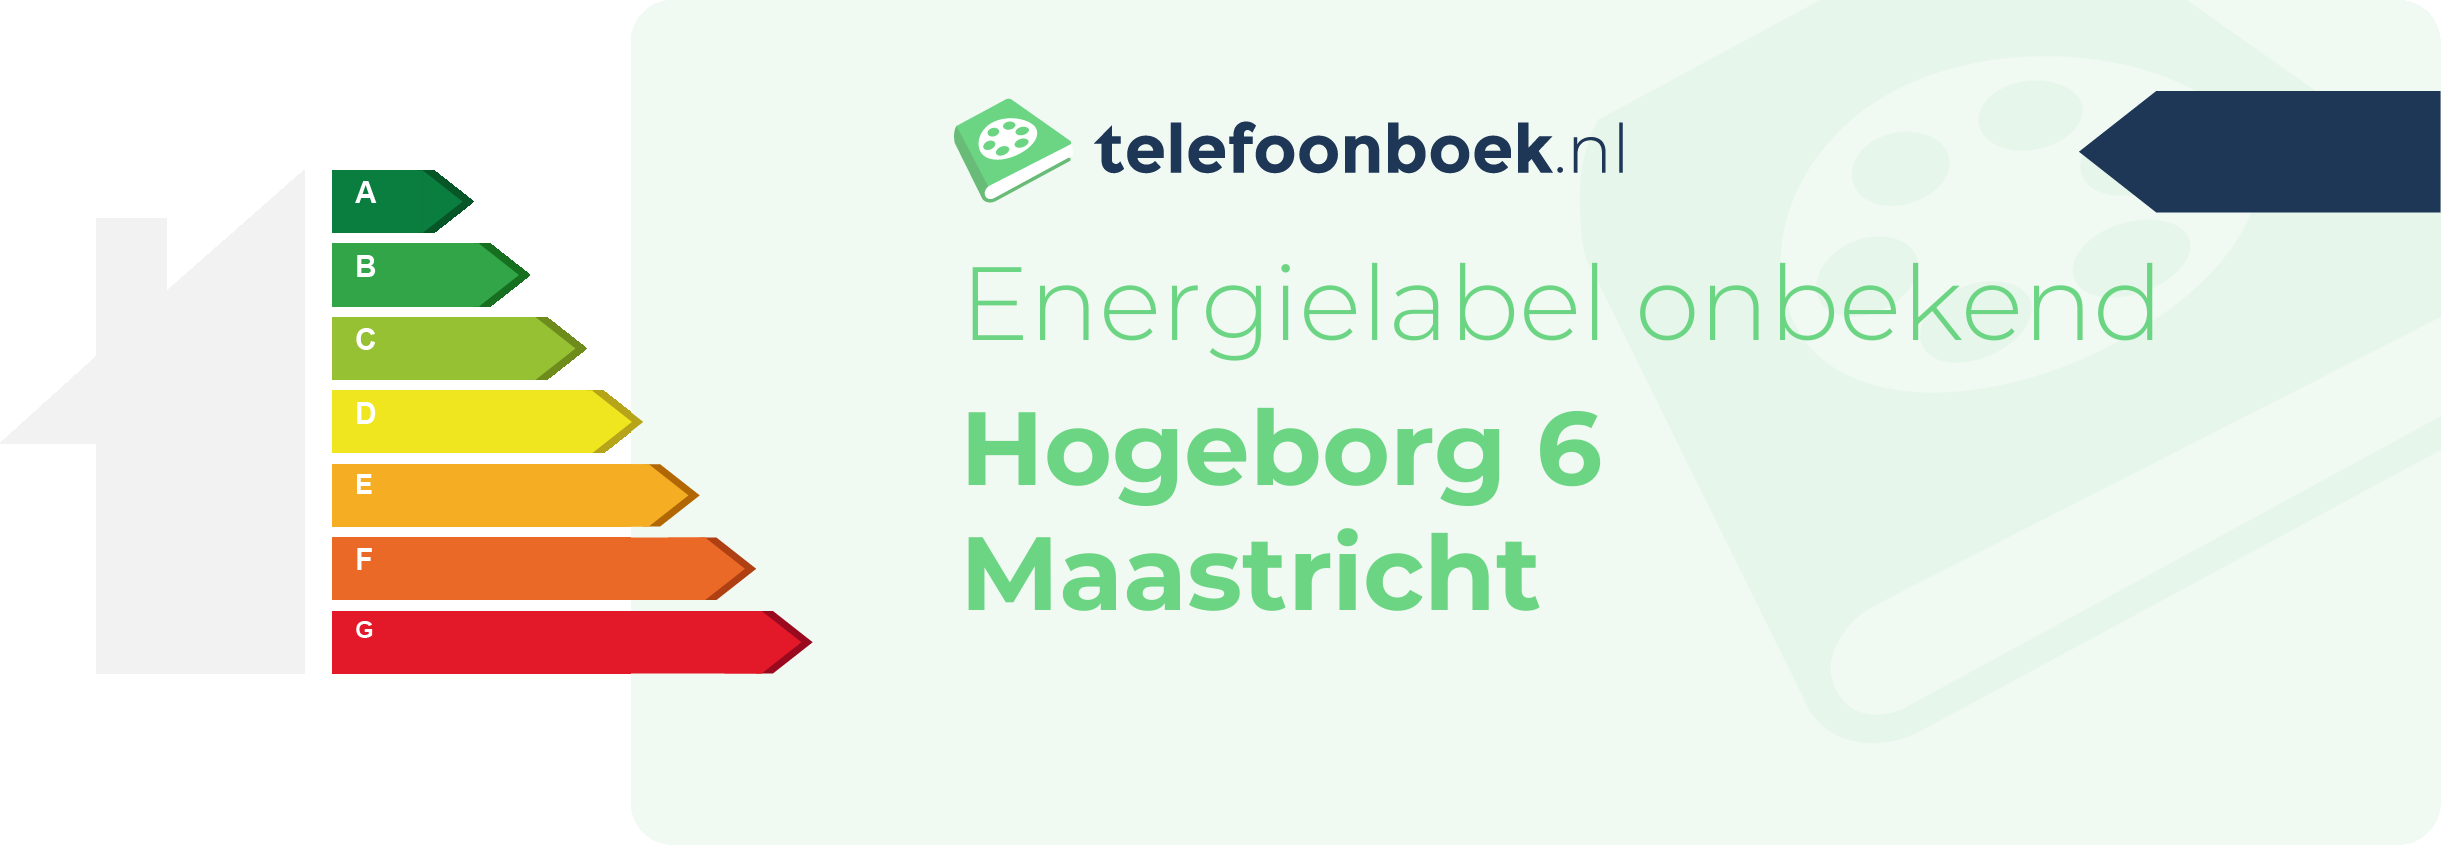 Energielabel Hogeborg 6 Maastricht